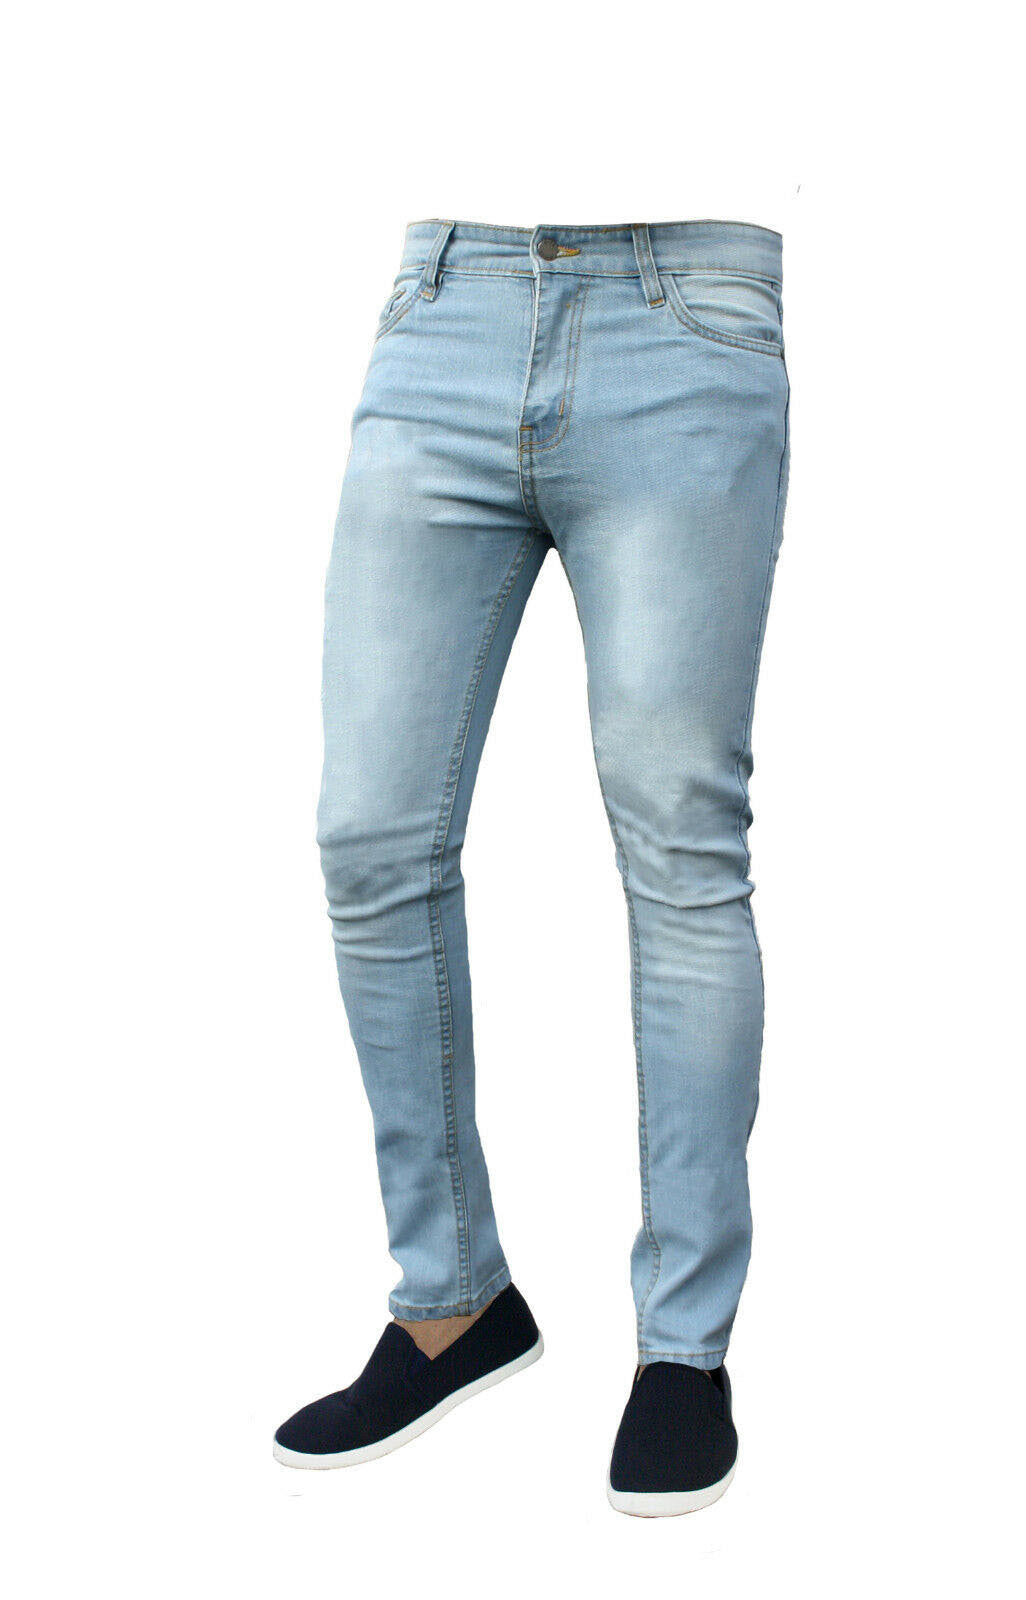 Stretch skinny slim-fit jeans pants